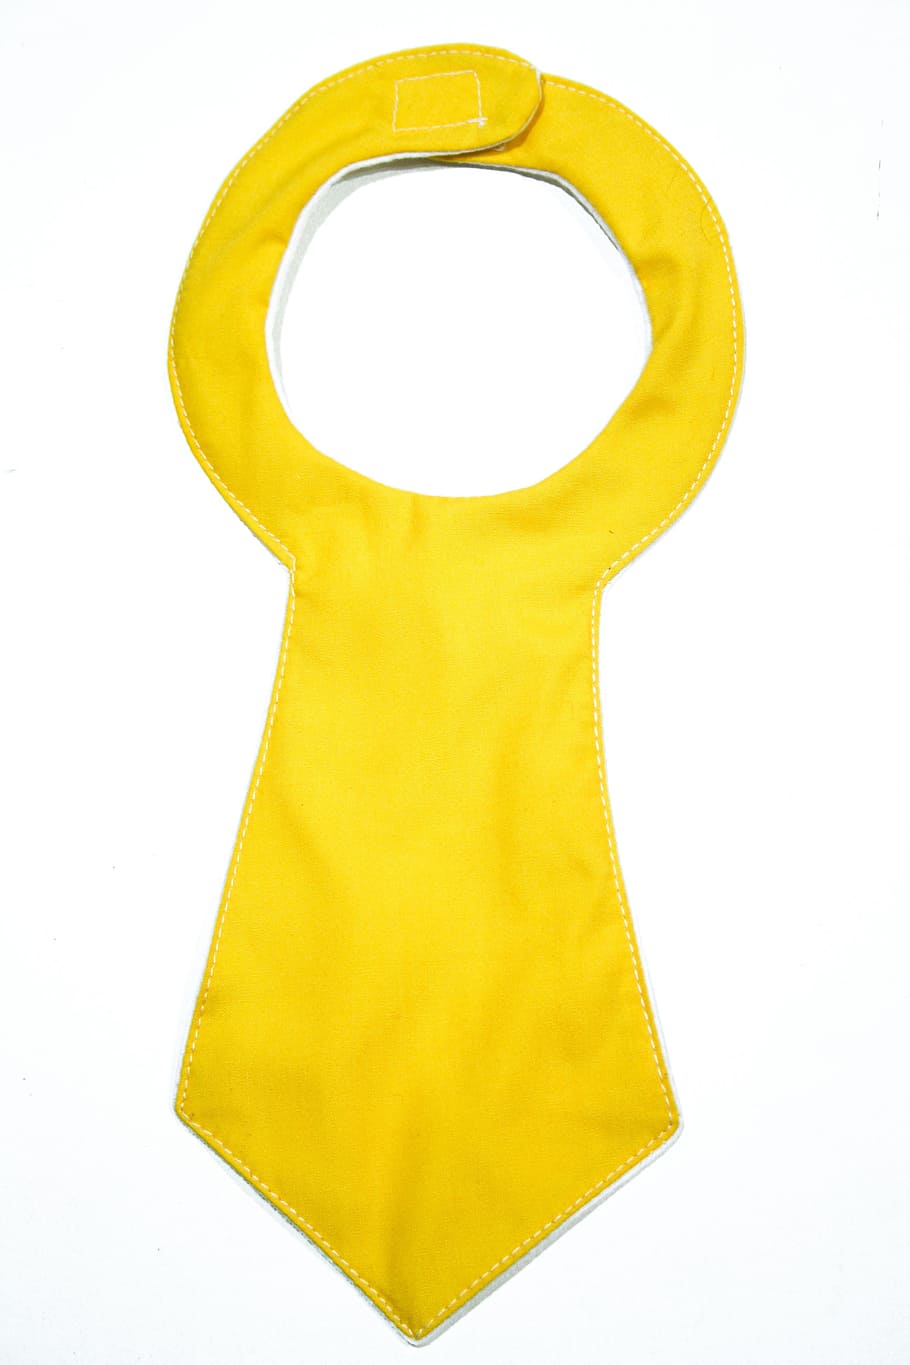 Bib, Bandanas, Accessory, Bebe, yellow, white background, cut out, adhesive tape, paper, blank